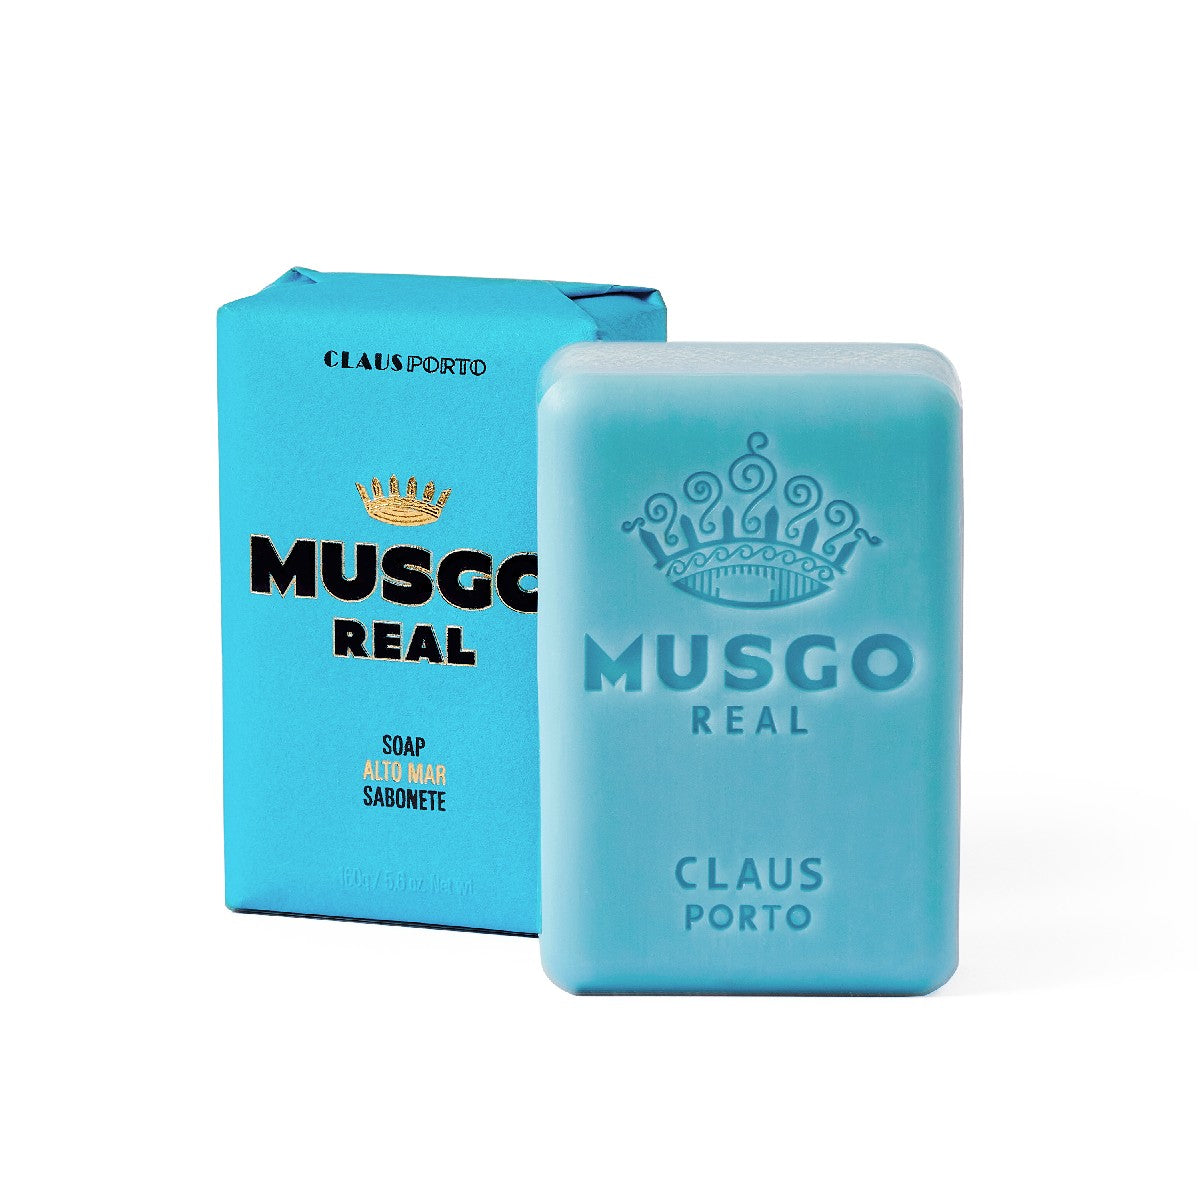 claus porto alto mar body soap musgo real